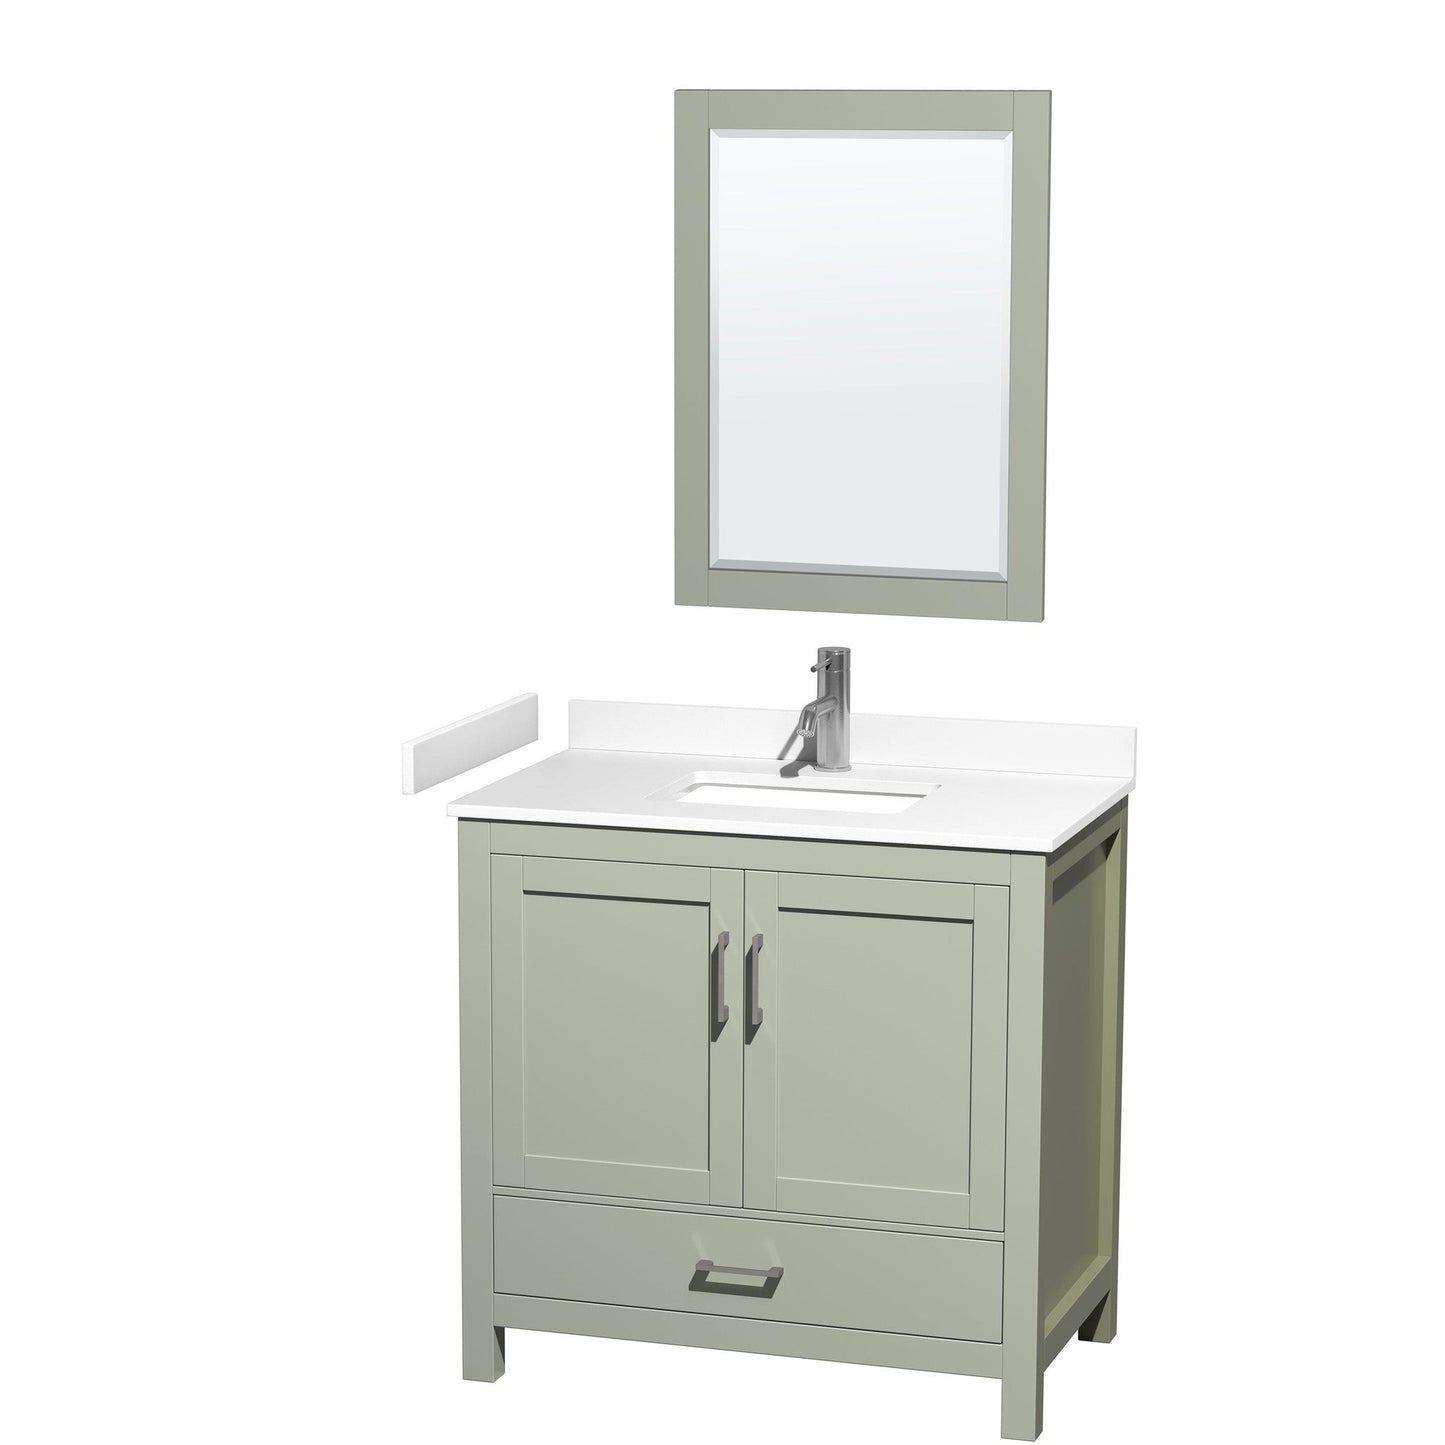 Sheffield 36" Single Bathroom Vanity in Light Green, White Cultured Marble Countertop, Undermount Square Sink, Brushed Nickel Trim, 24" Mirror